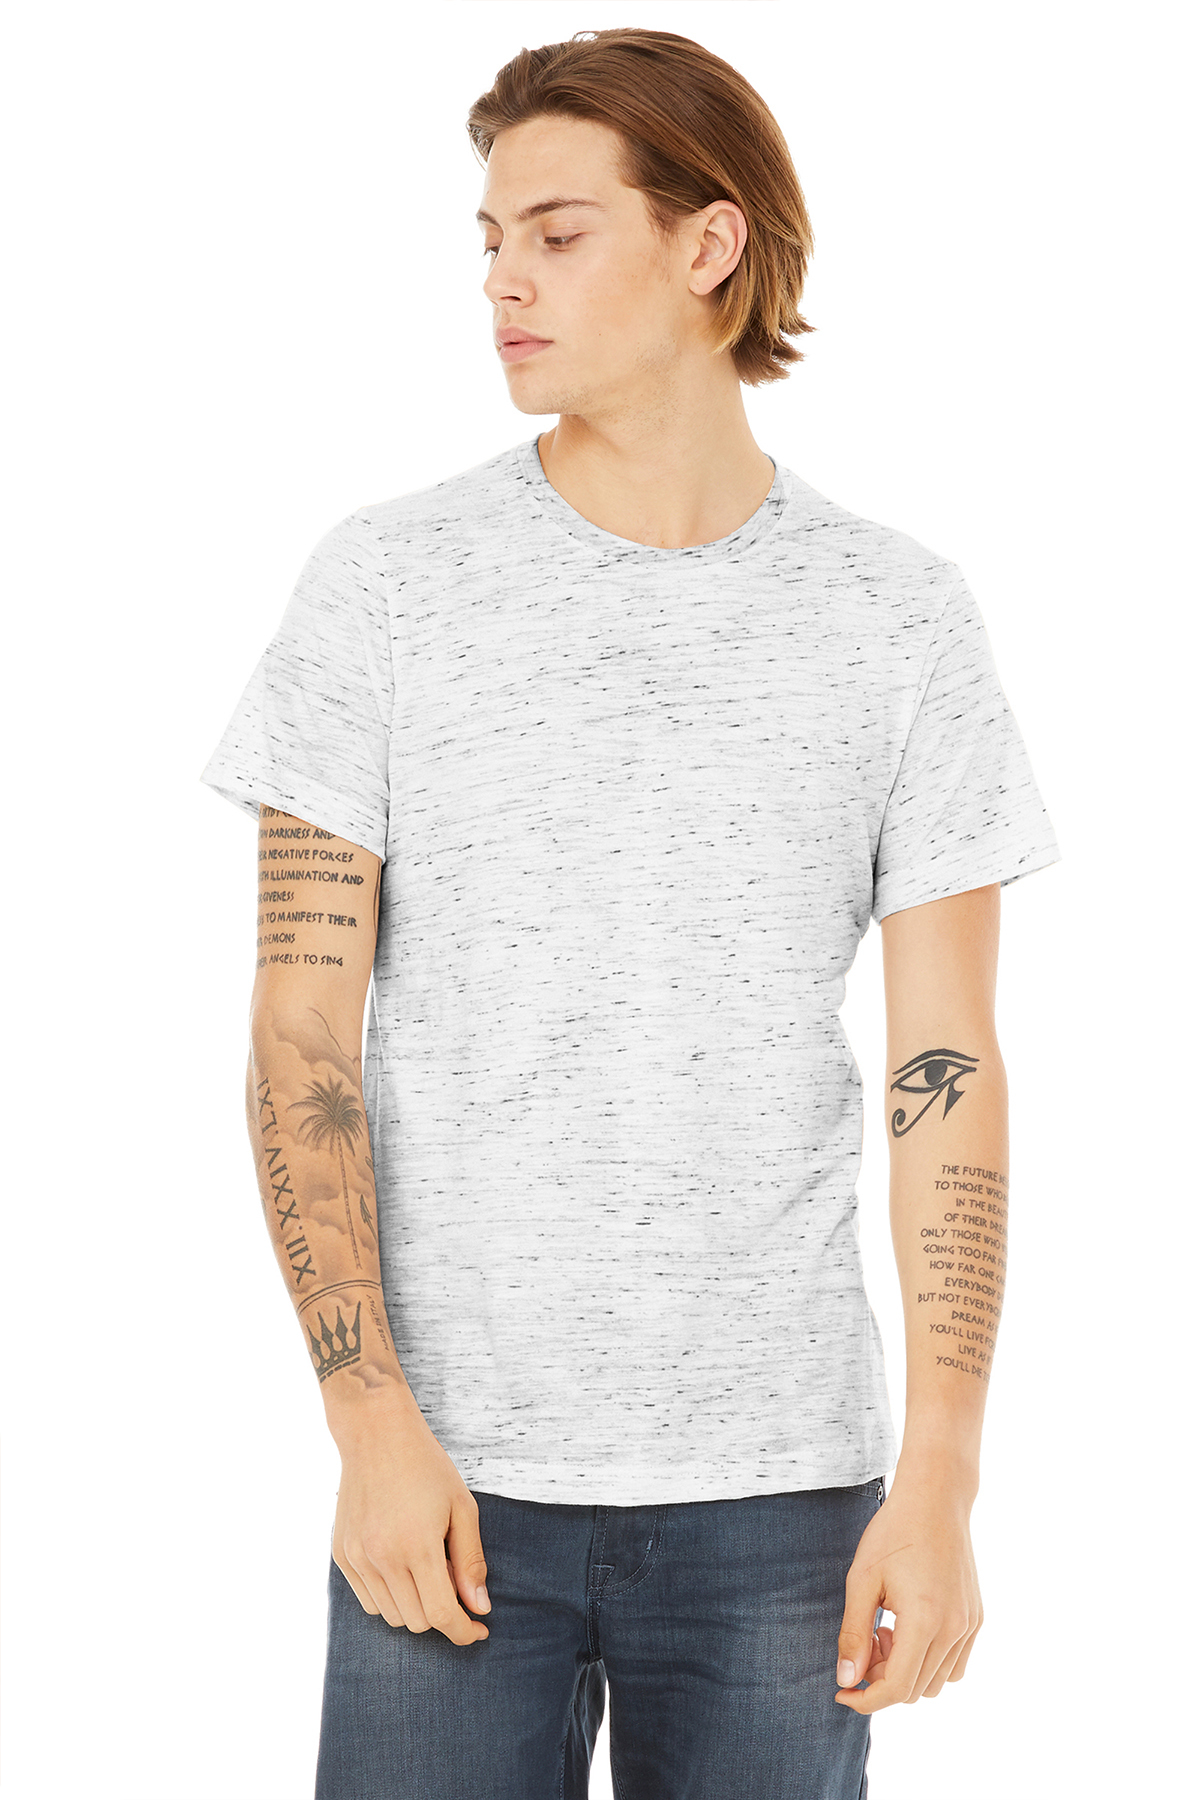 WHITE MARBLE Bella Canvas Unisex Poly-Cotton Short-Sleeve T-Shirt 2XL 